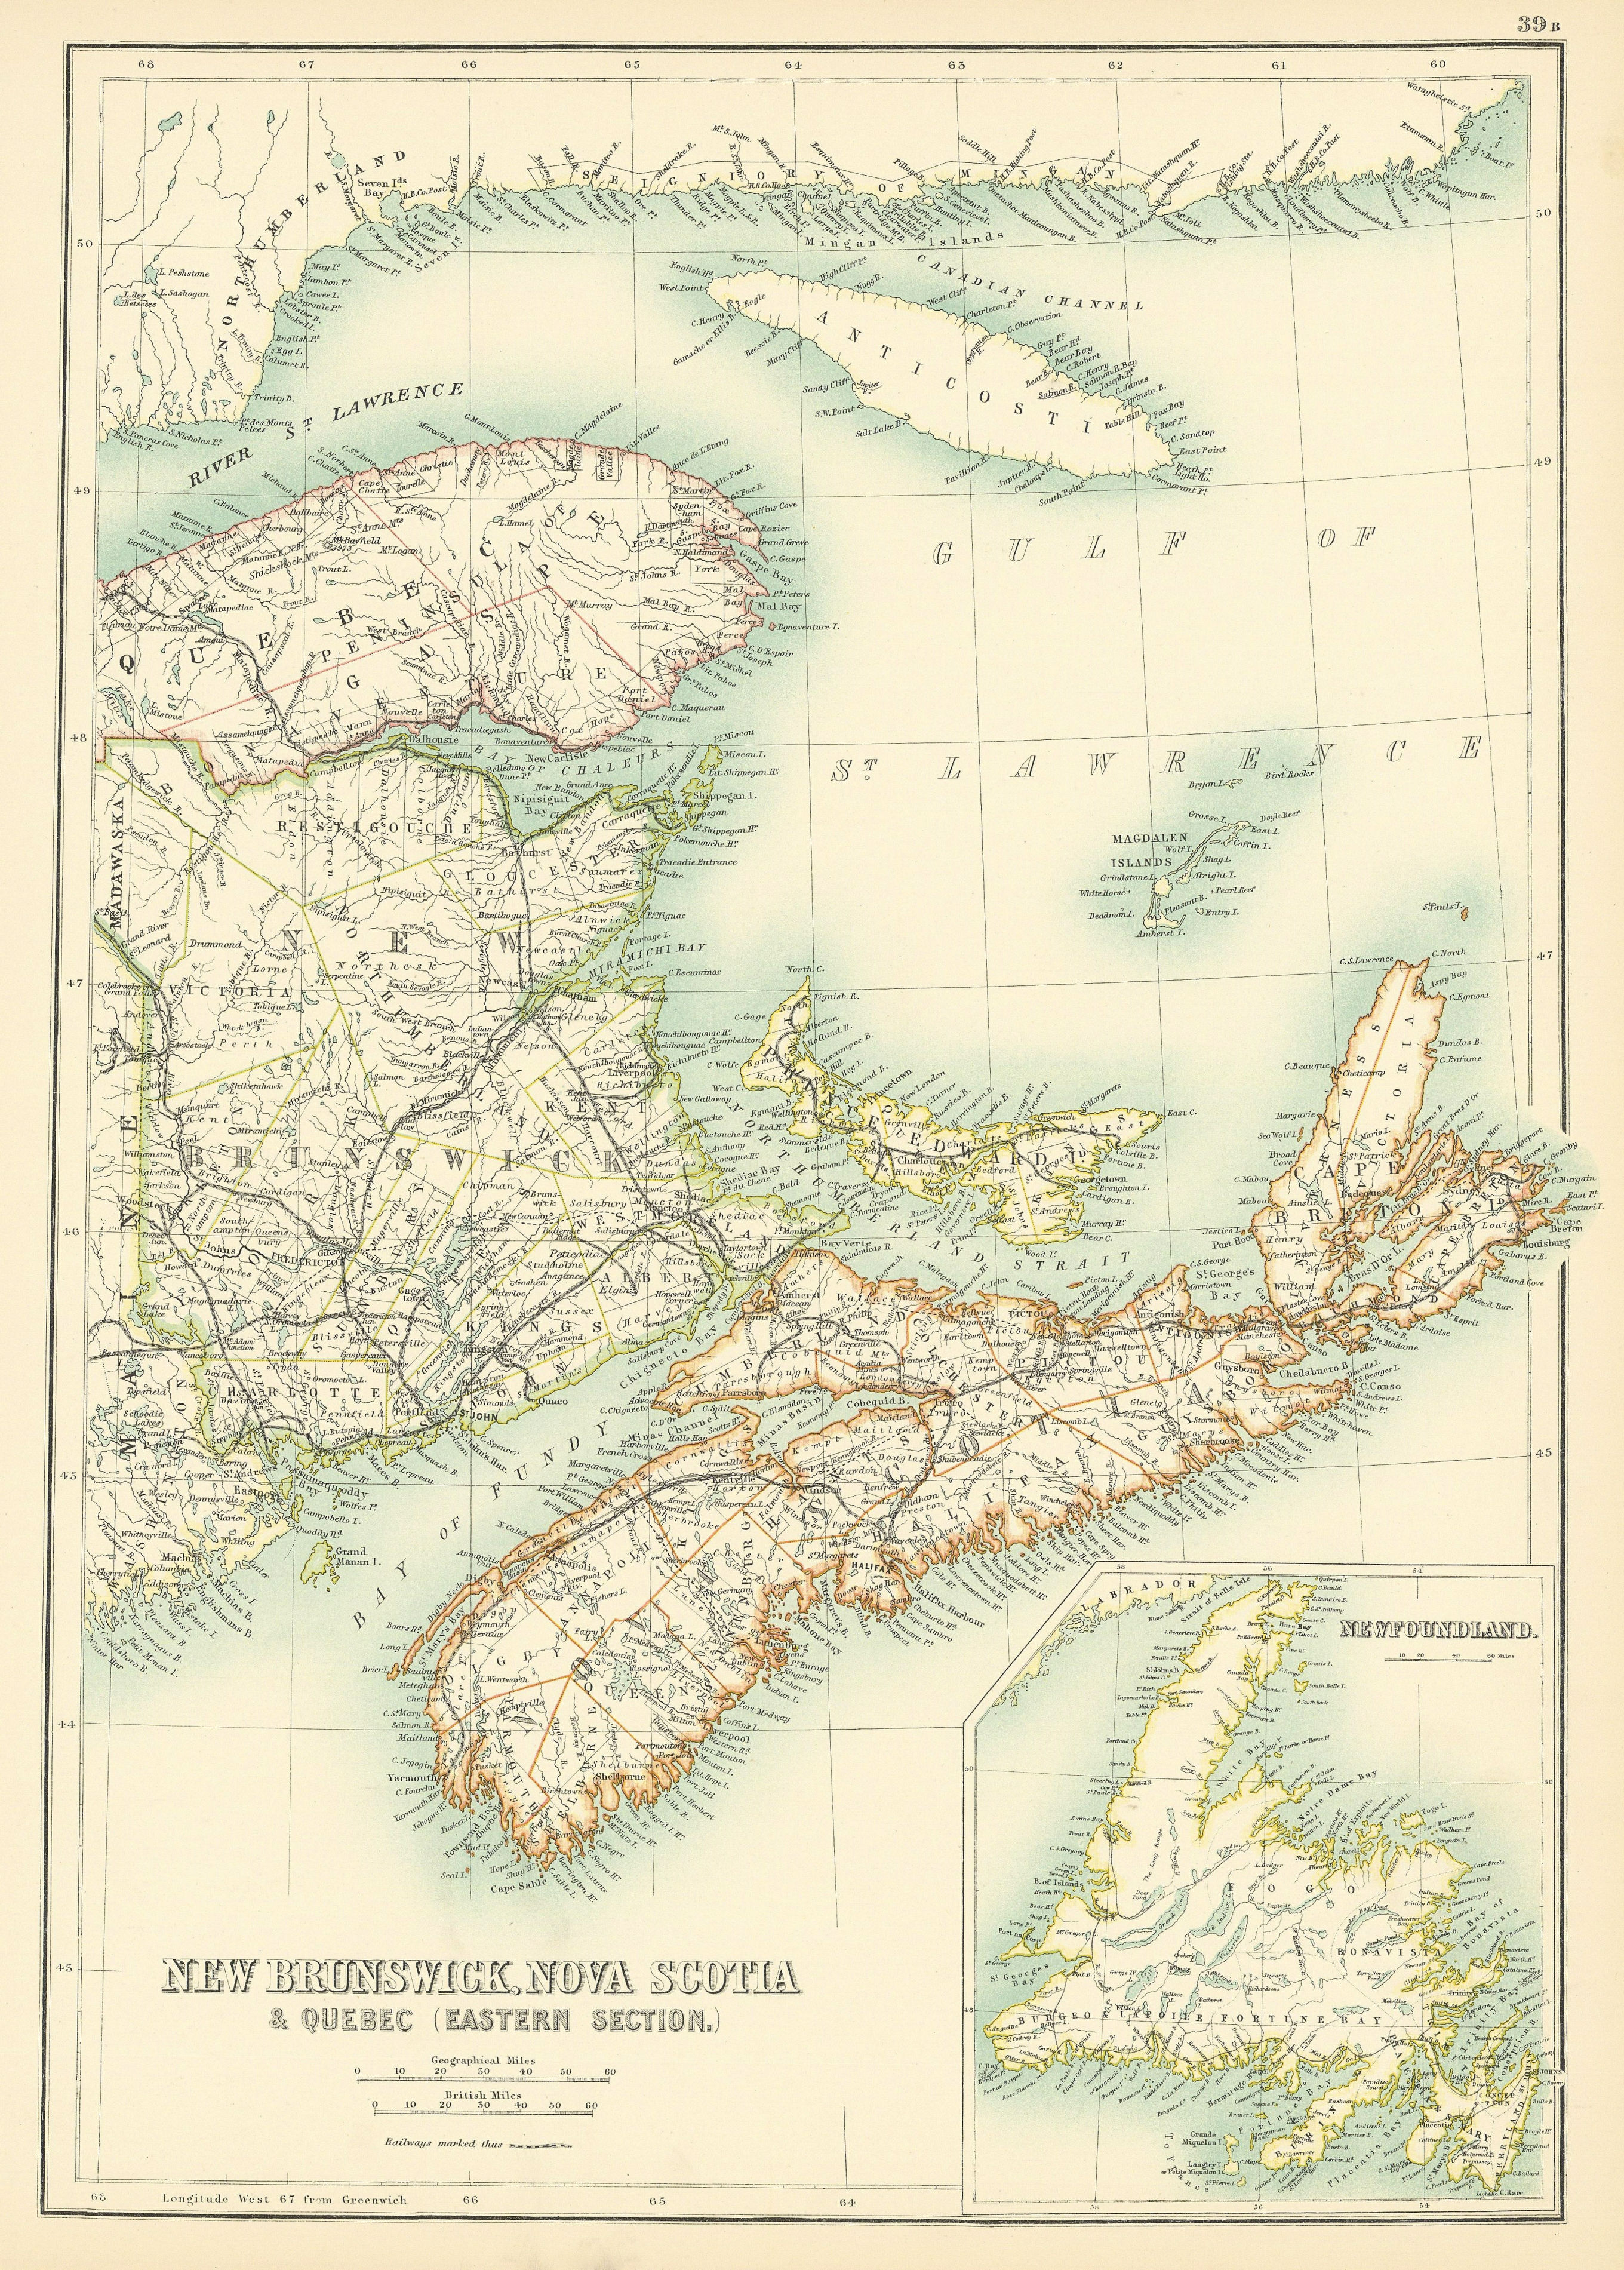 Associate Product New Brunswick, Nova Scotia & Quebec. Prince Edward Island. BARTHOLOMEW 1898 map